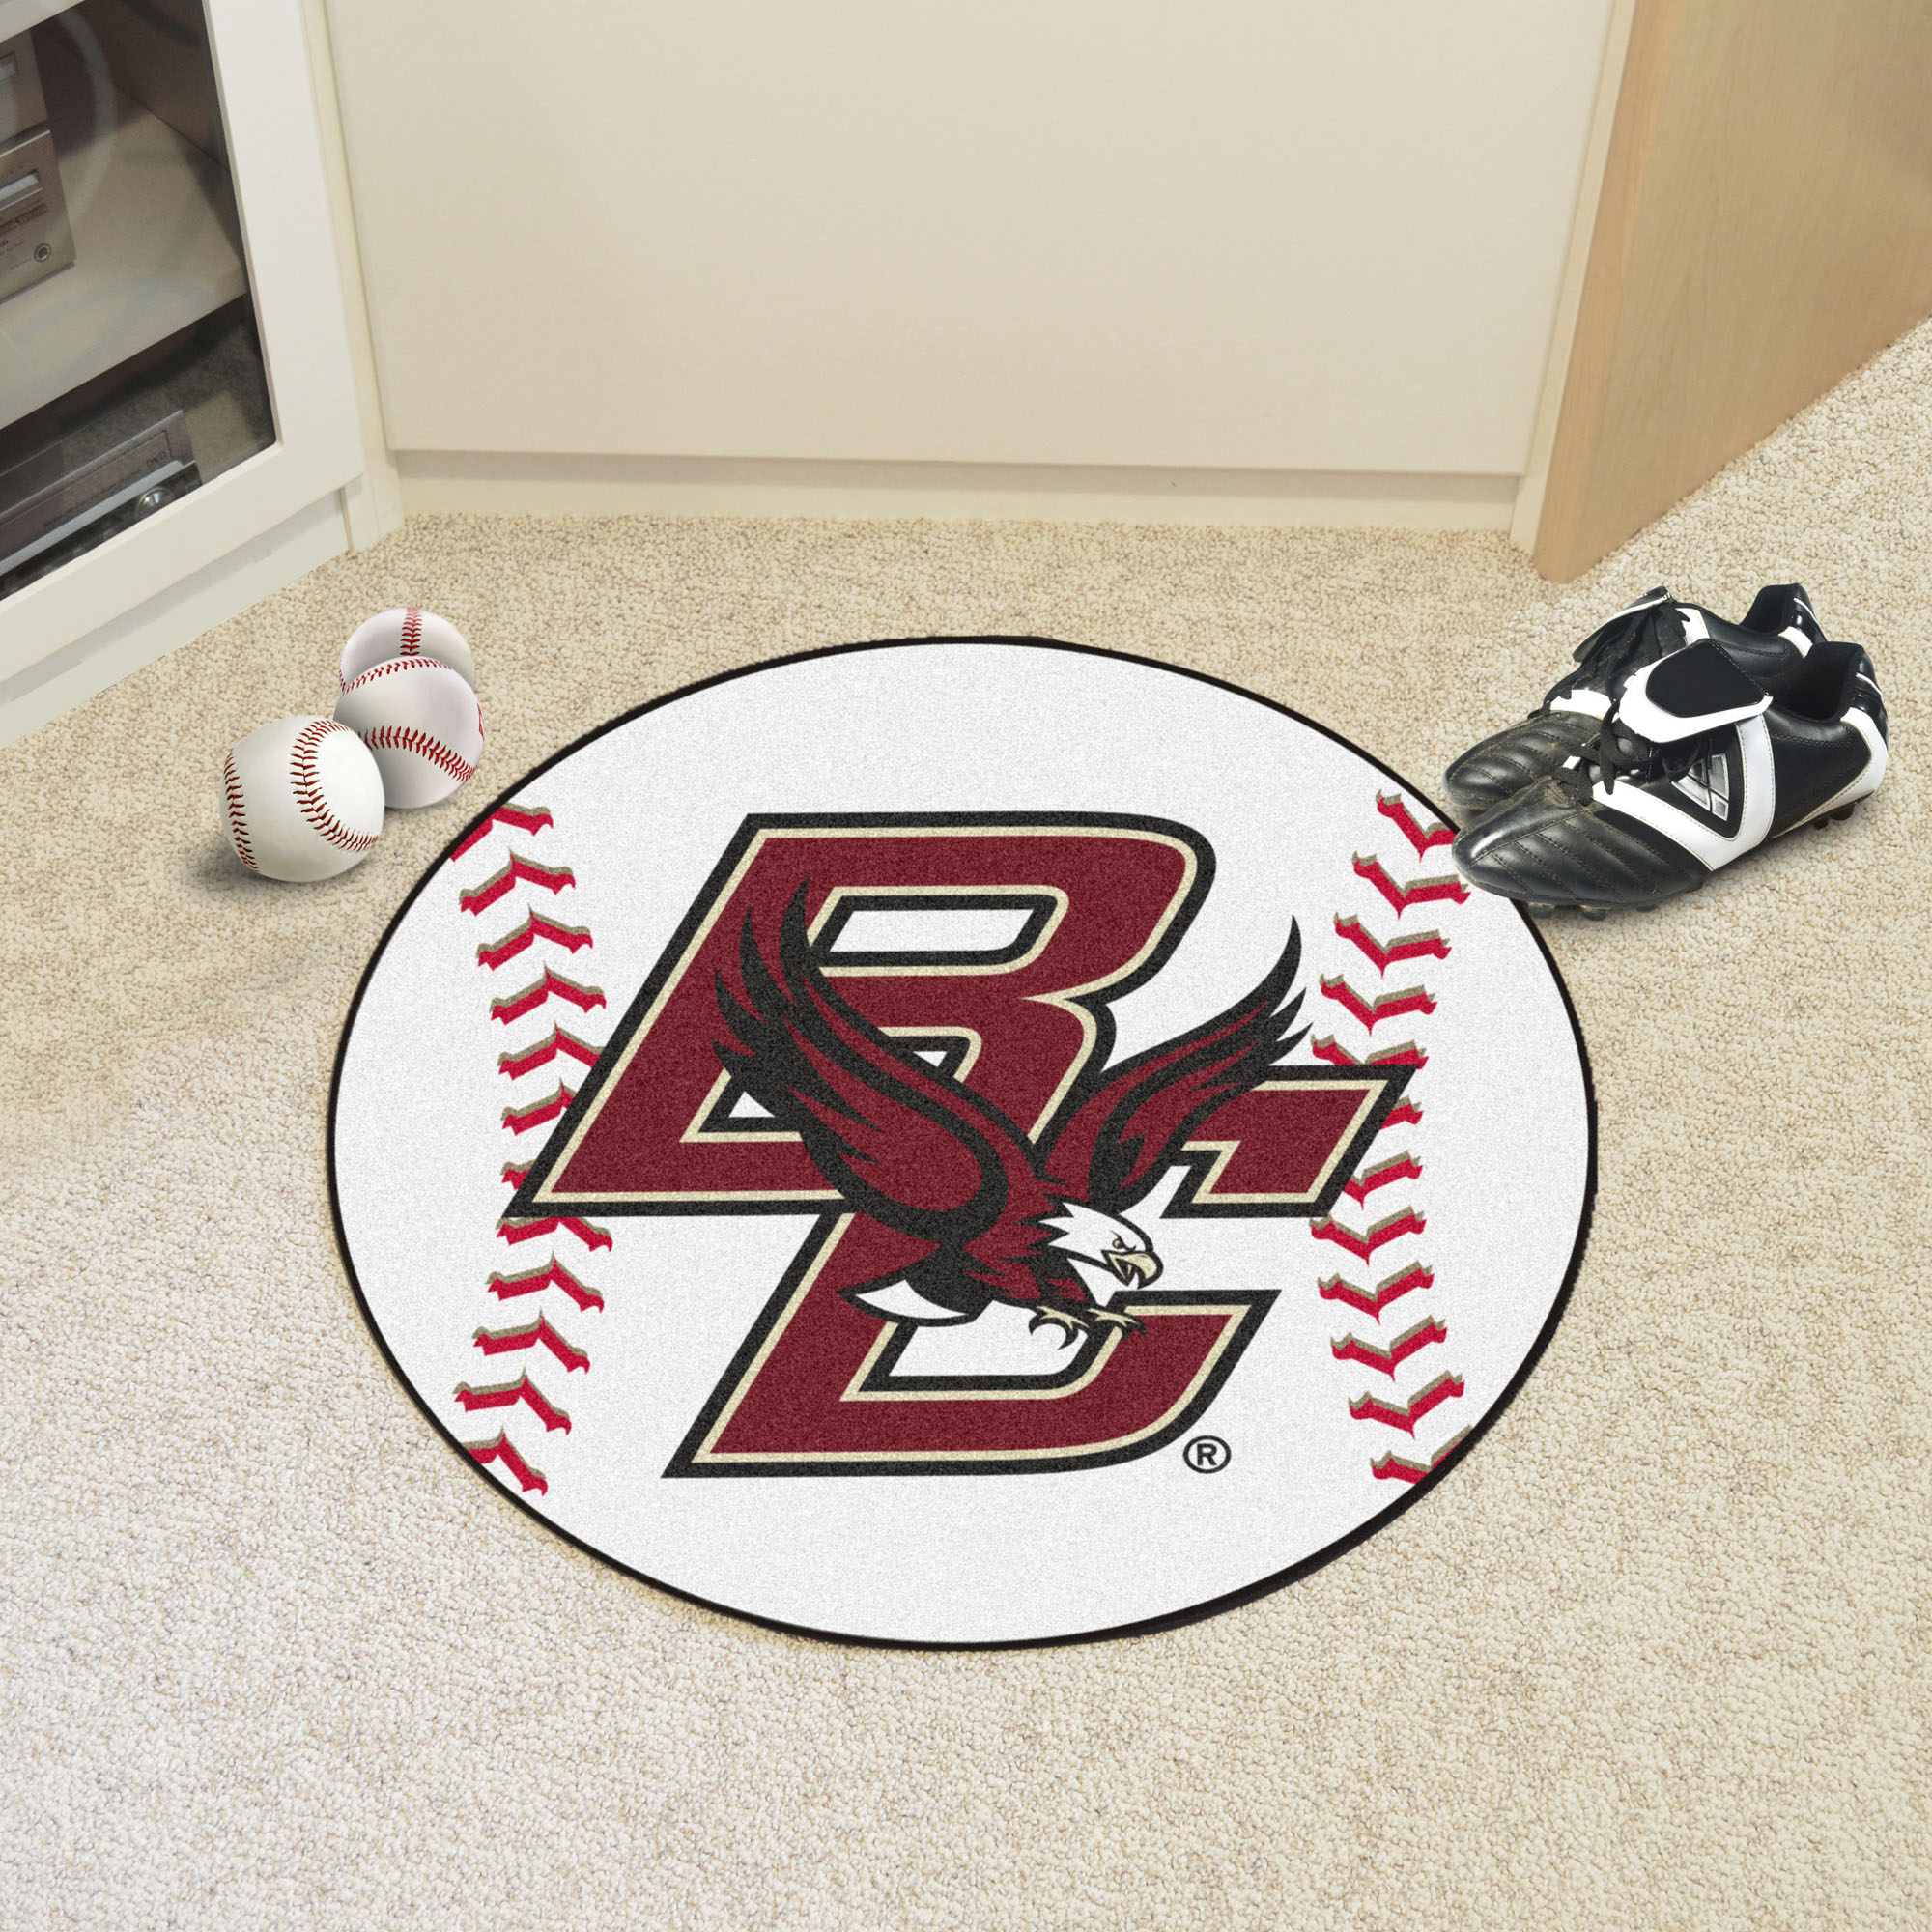 Boston College Ball-Shaped Area Rugs (Ball Shaped Area Rugs: Baseball)